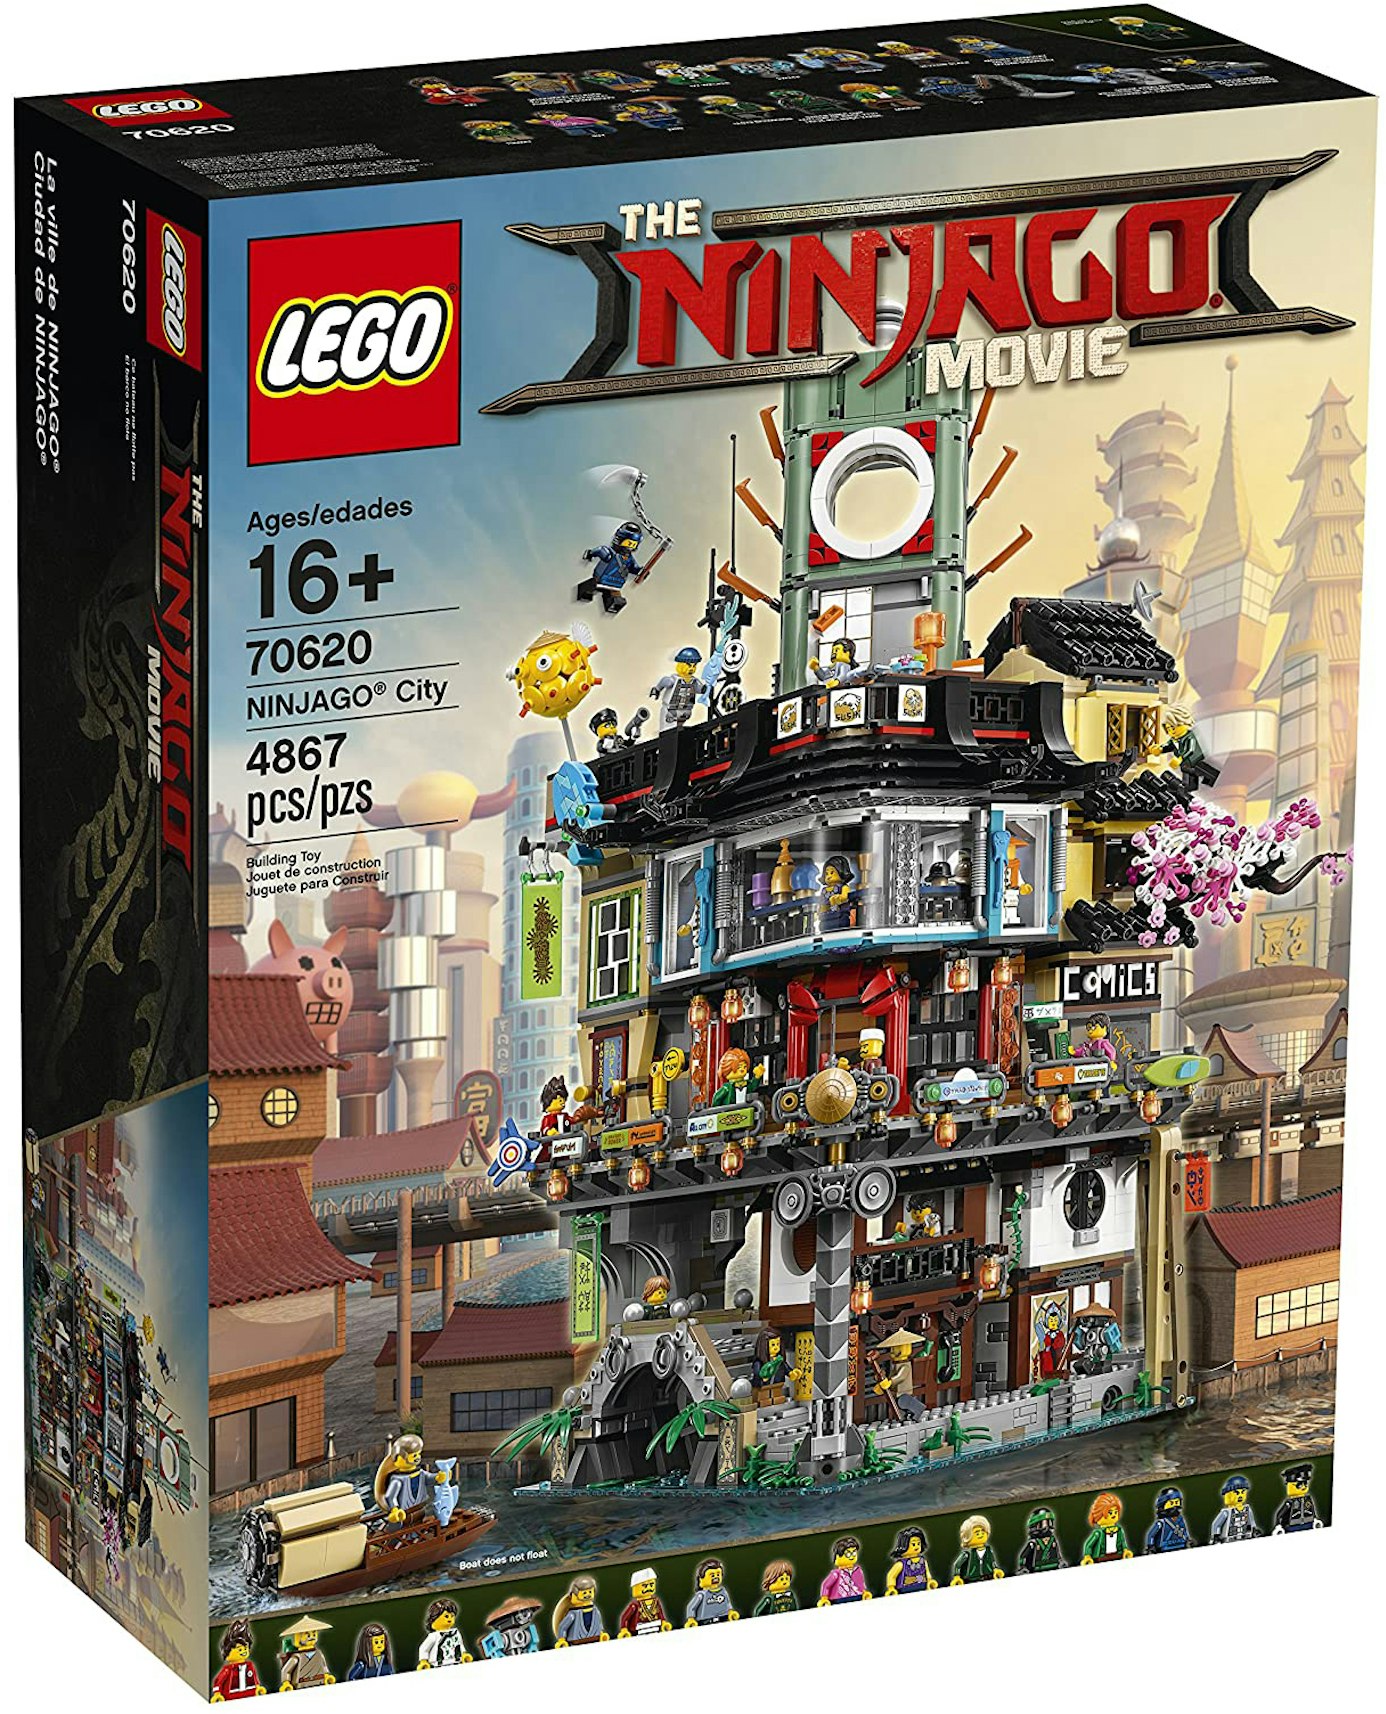 hvede Inca Empire Skulptur LEGO Ninjago City Set 70620 - US